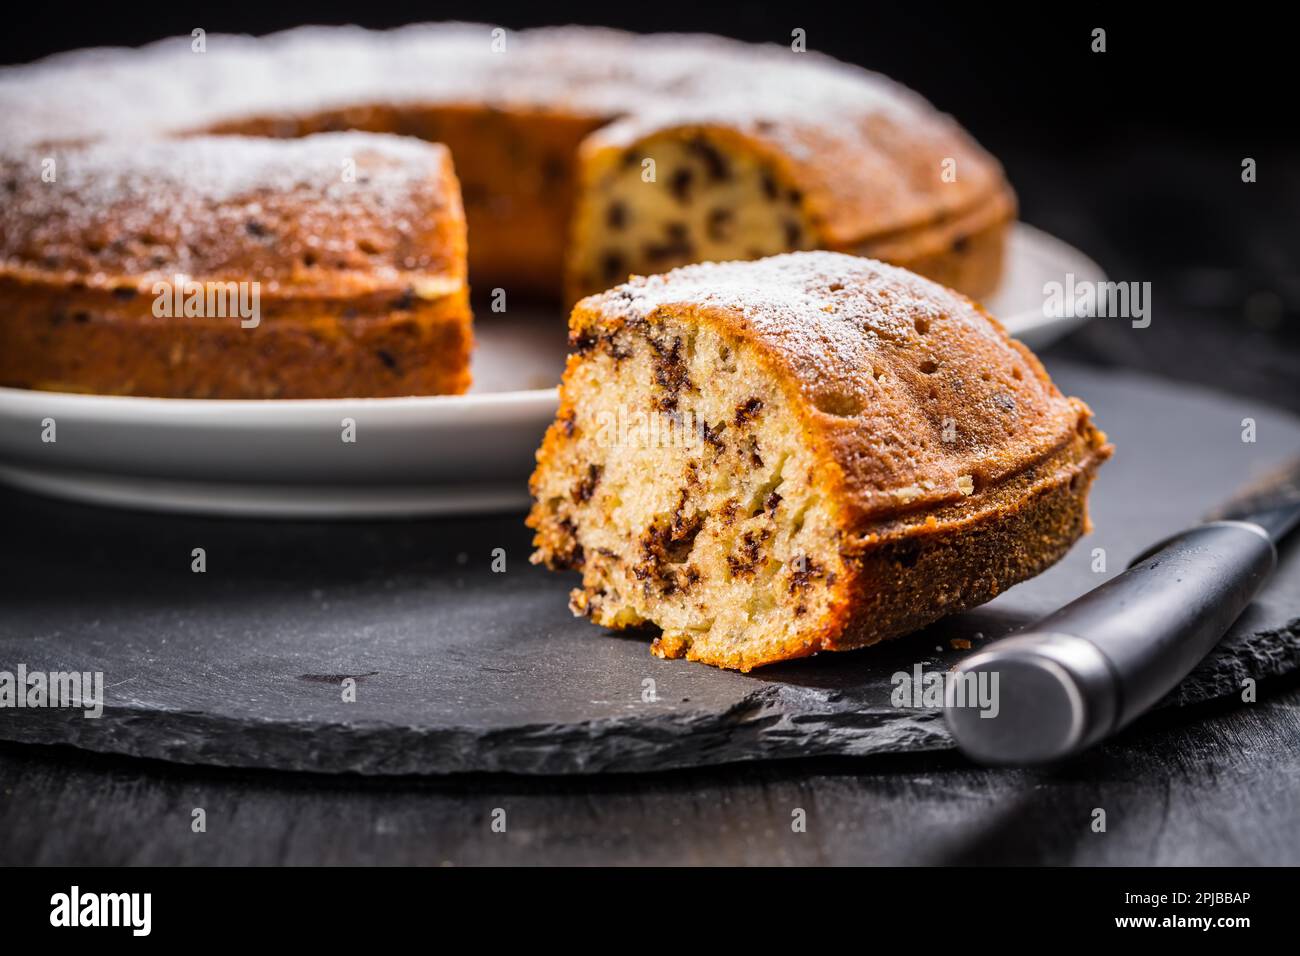 https://c8.alamy.com/comp/2PJBBAP/homemade-vegan-banana-cake-baked-in-bundt-pan-decorated-with-powdered-sugar-2PJBBAP.jpg